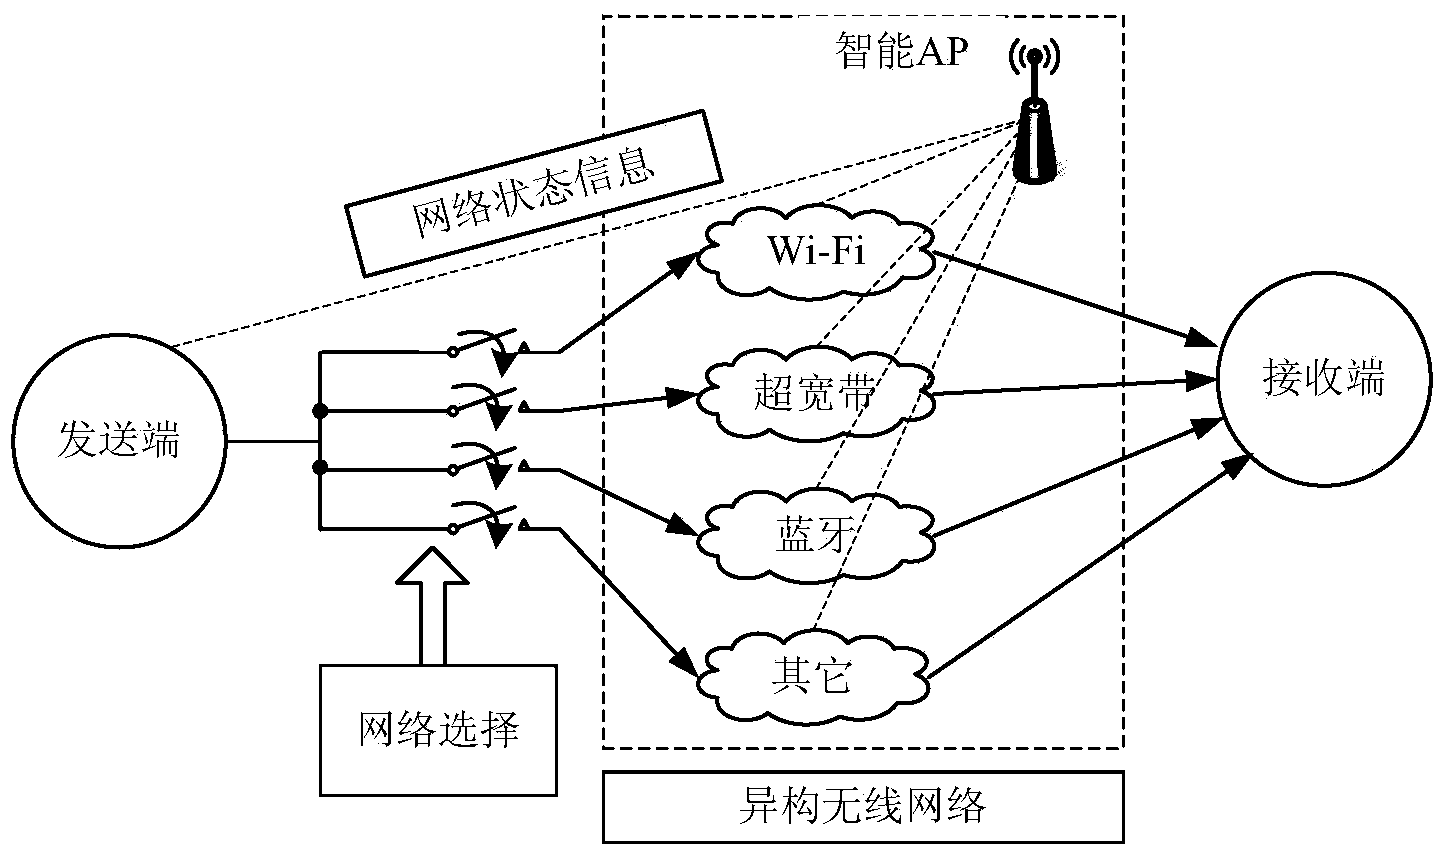 Multi-target-network power distribution method in heterogeneous wireless network cooperative communication